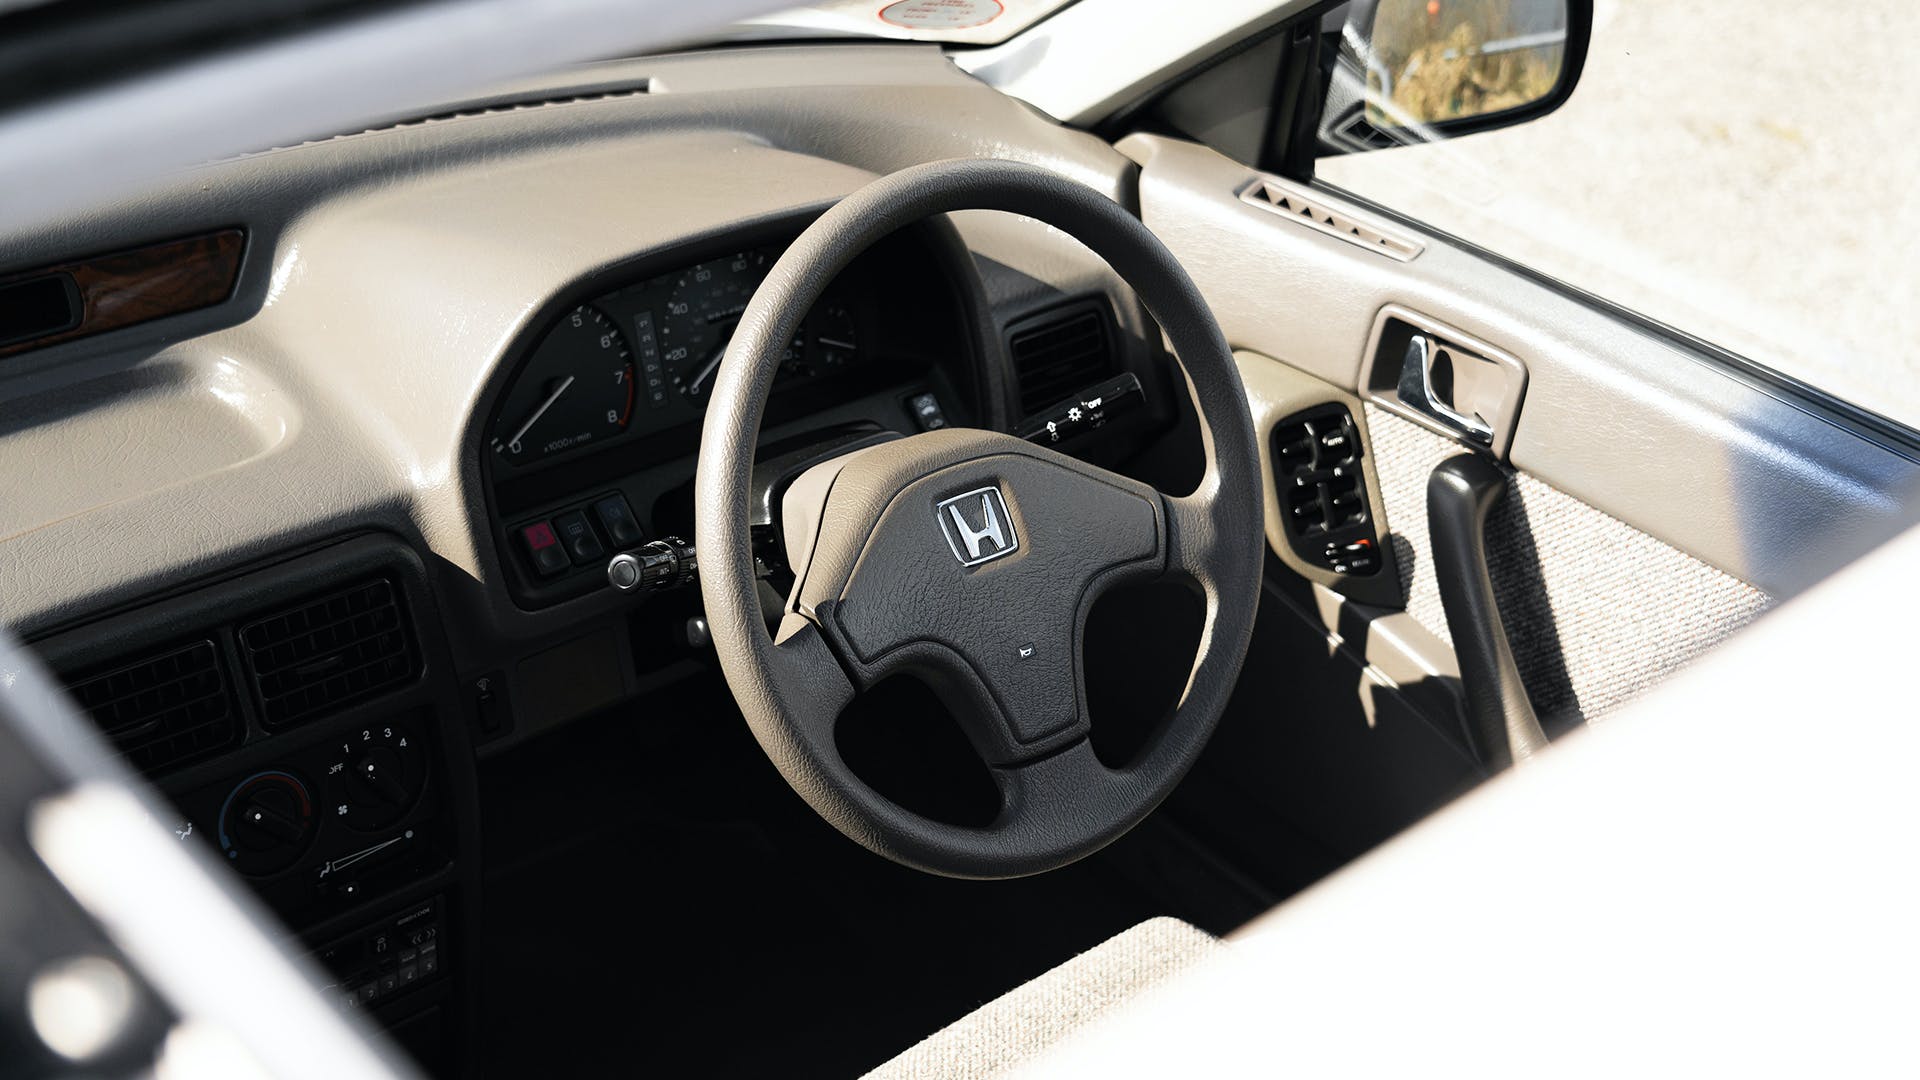 Honda Concerto interior